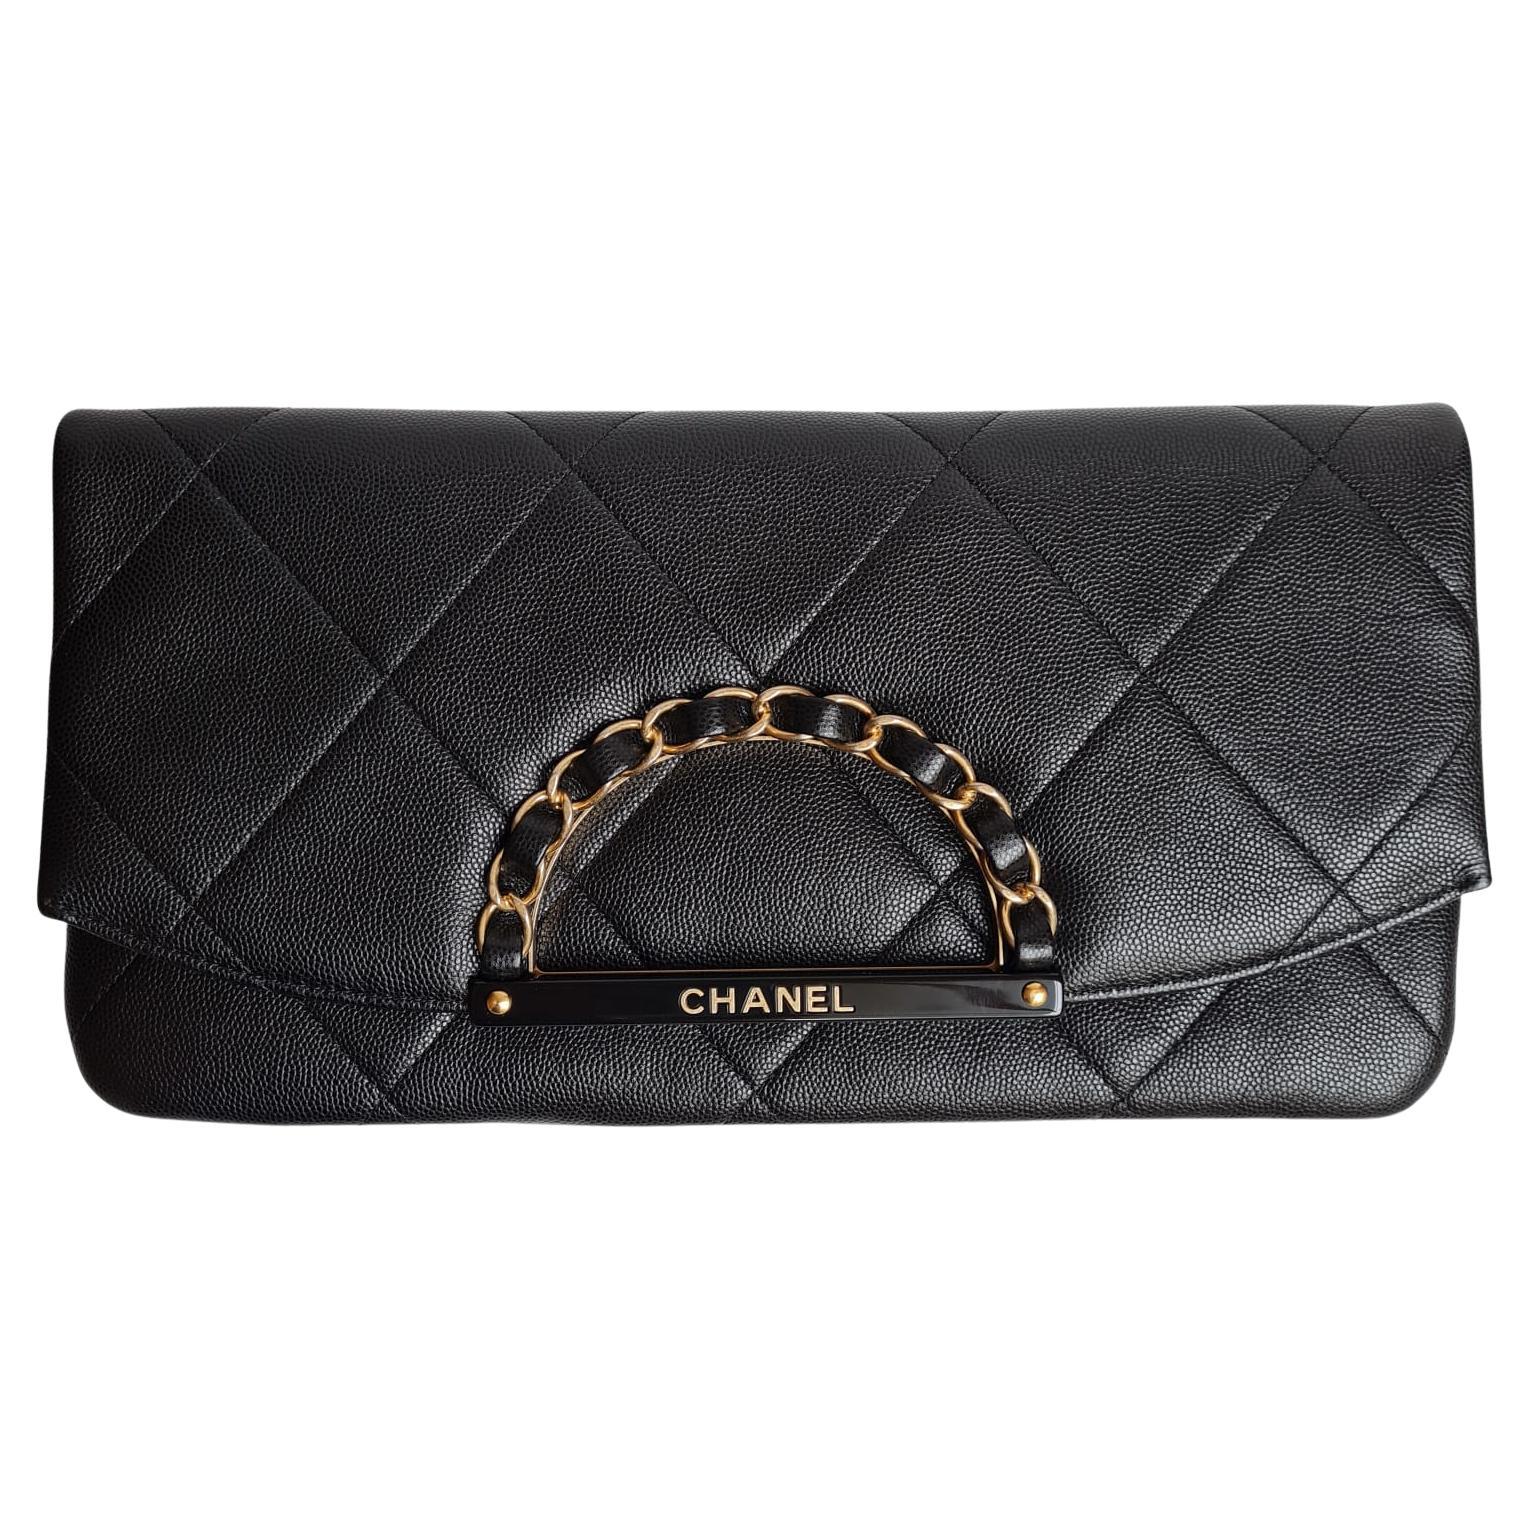 Chanel Woven Chain Handle Caviar Clutch